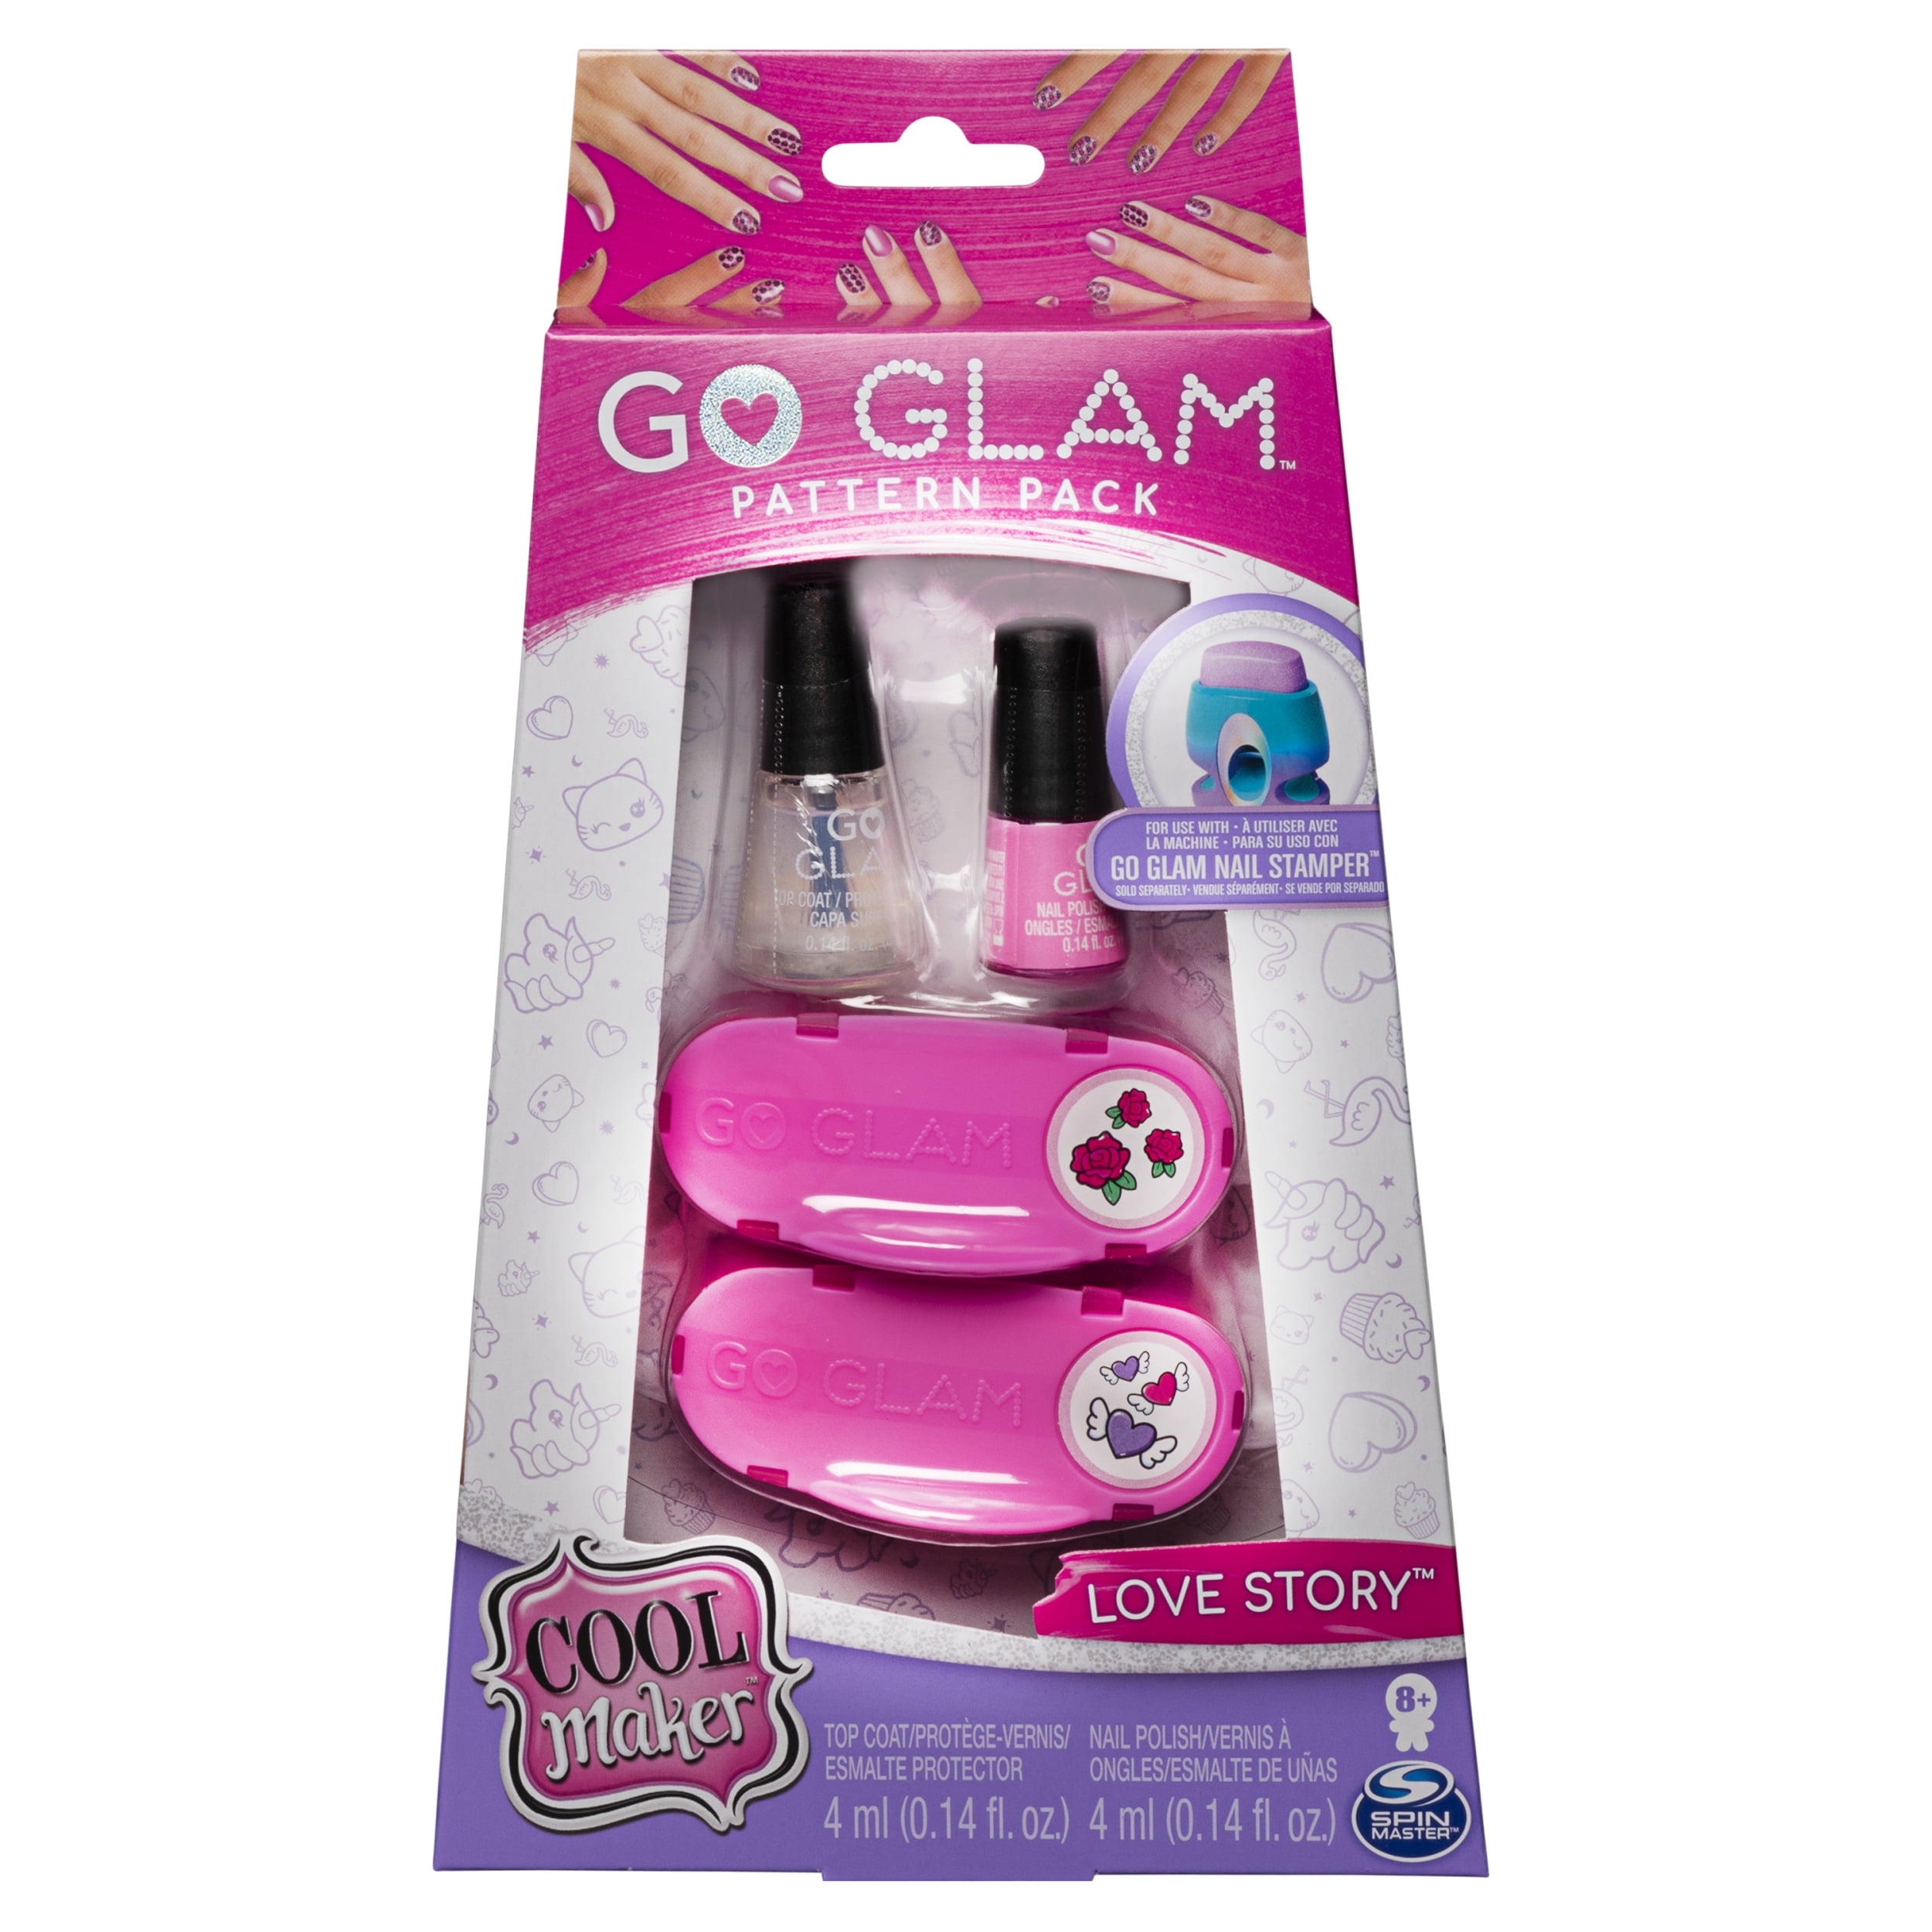 go glam nail stamper